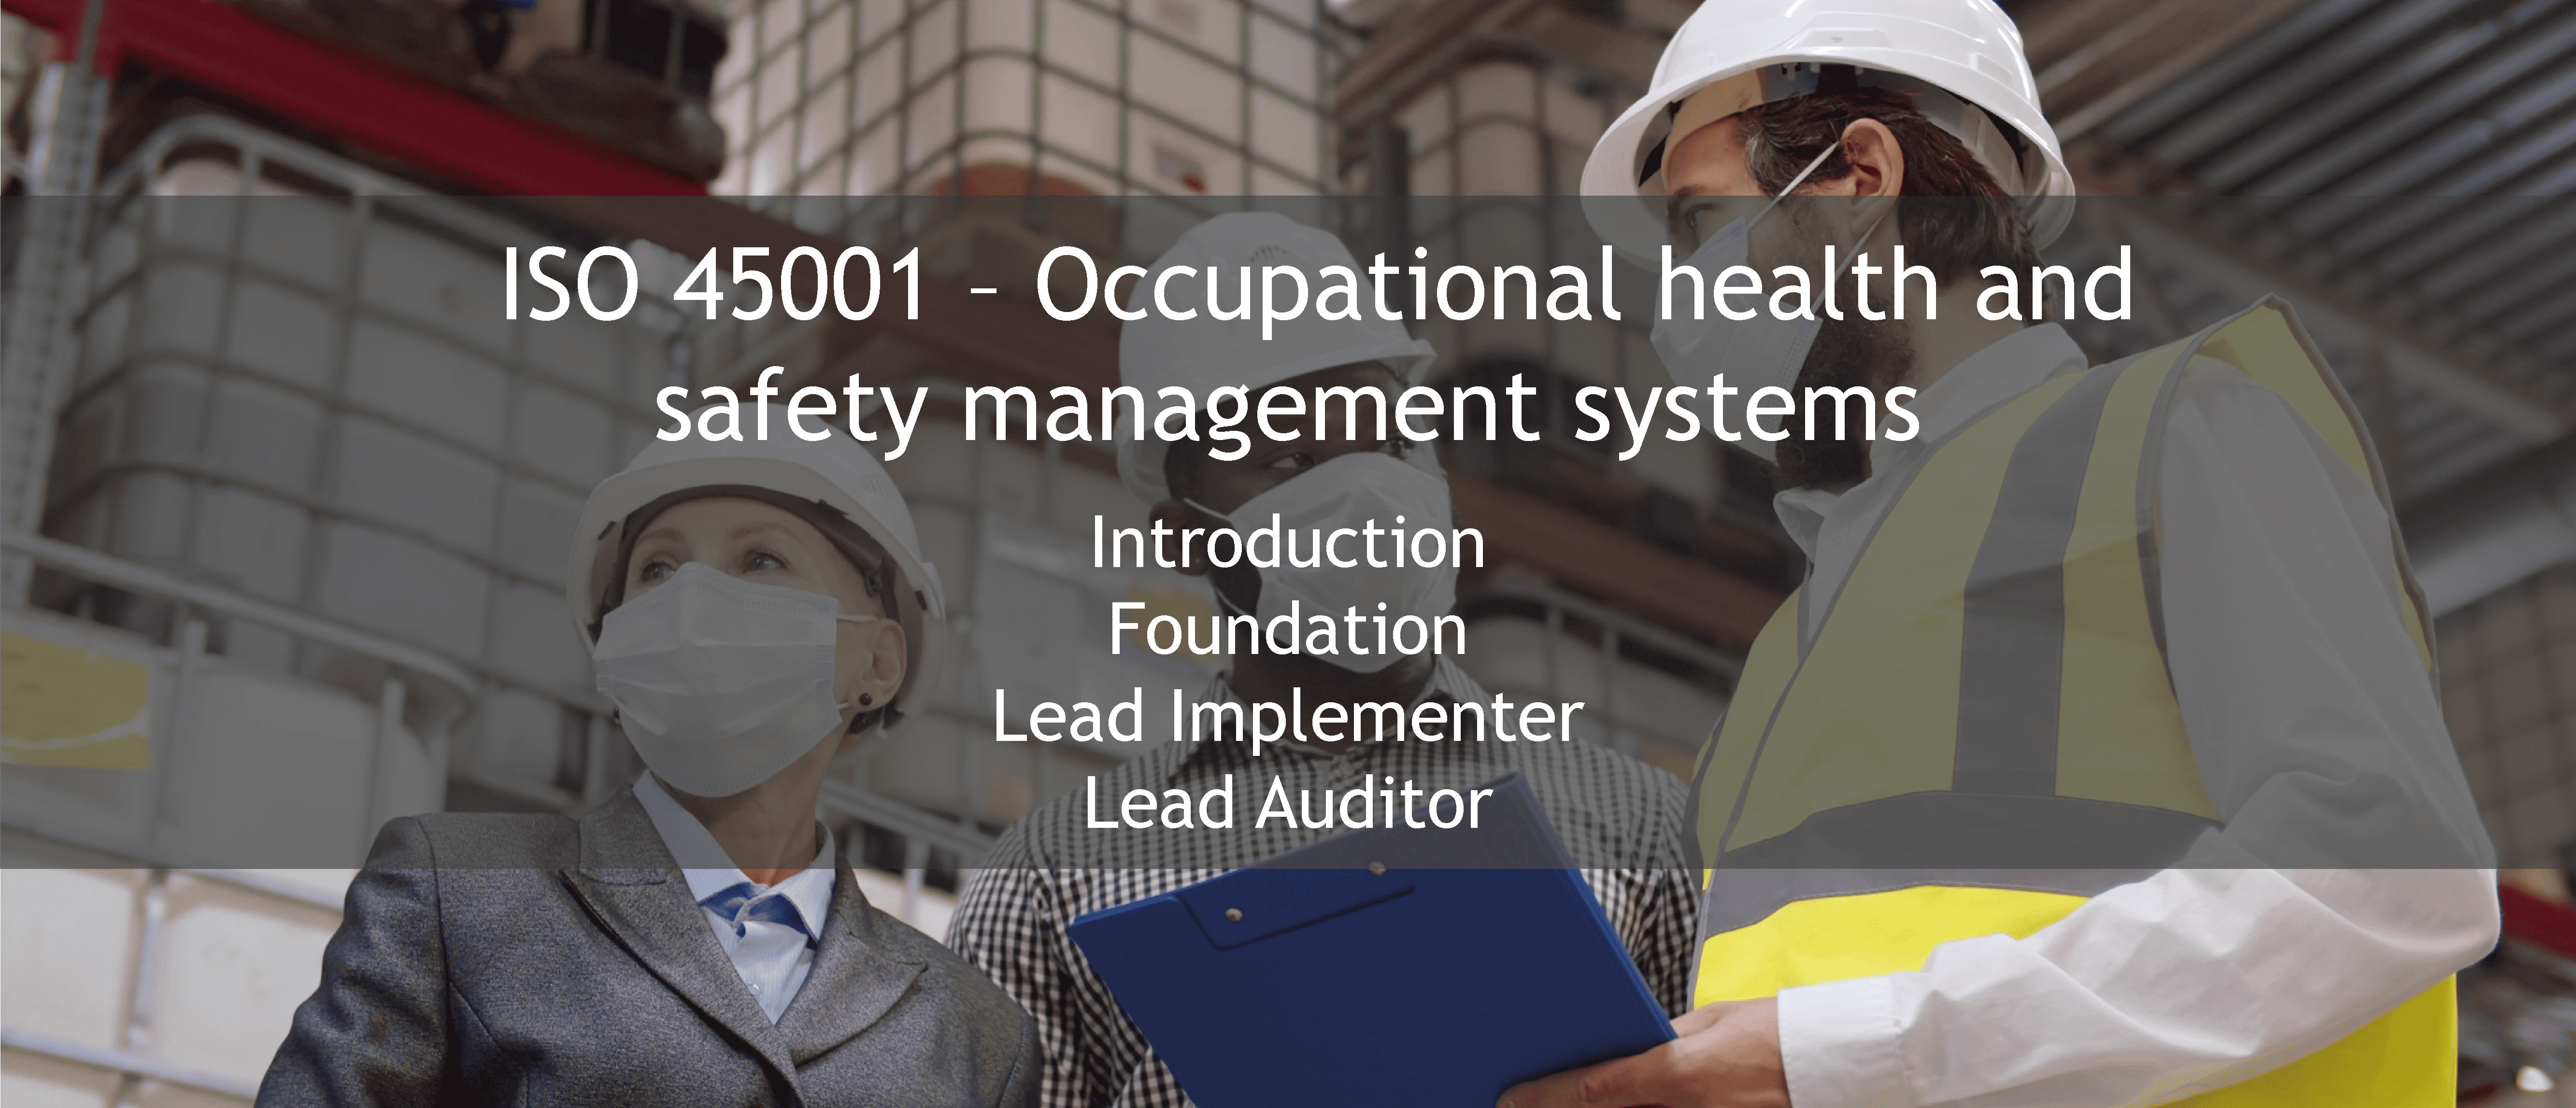 ISO 45001 training offer - ISO 14001 - Management environnemental